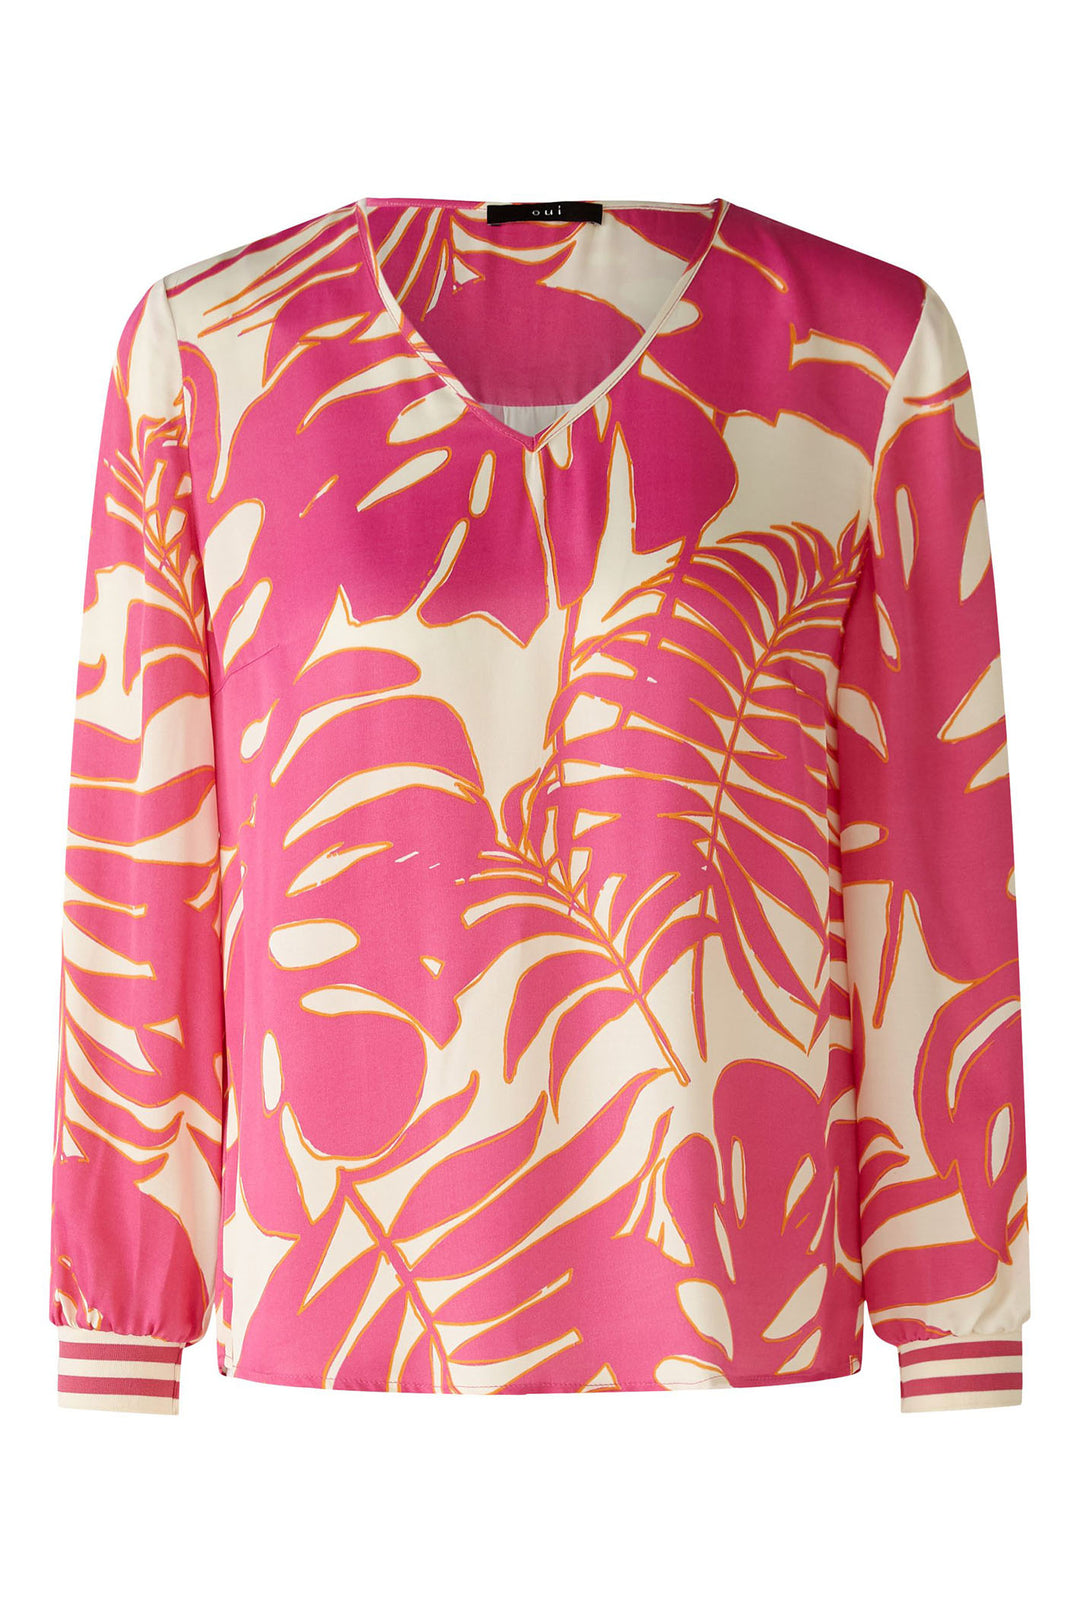 Oui 87616 Pink White Palm Print V-Neck Blouse - Olivia Grace Fashion